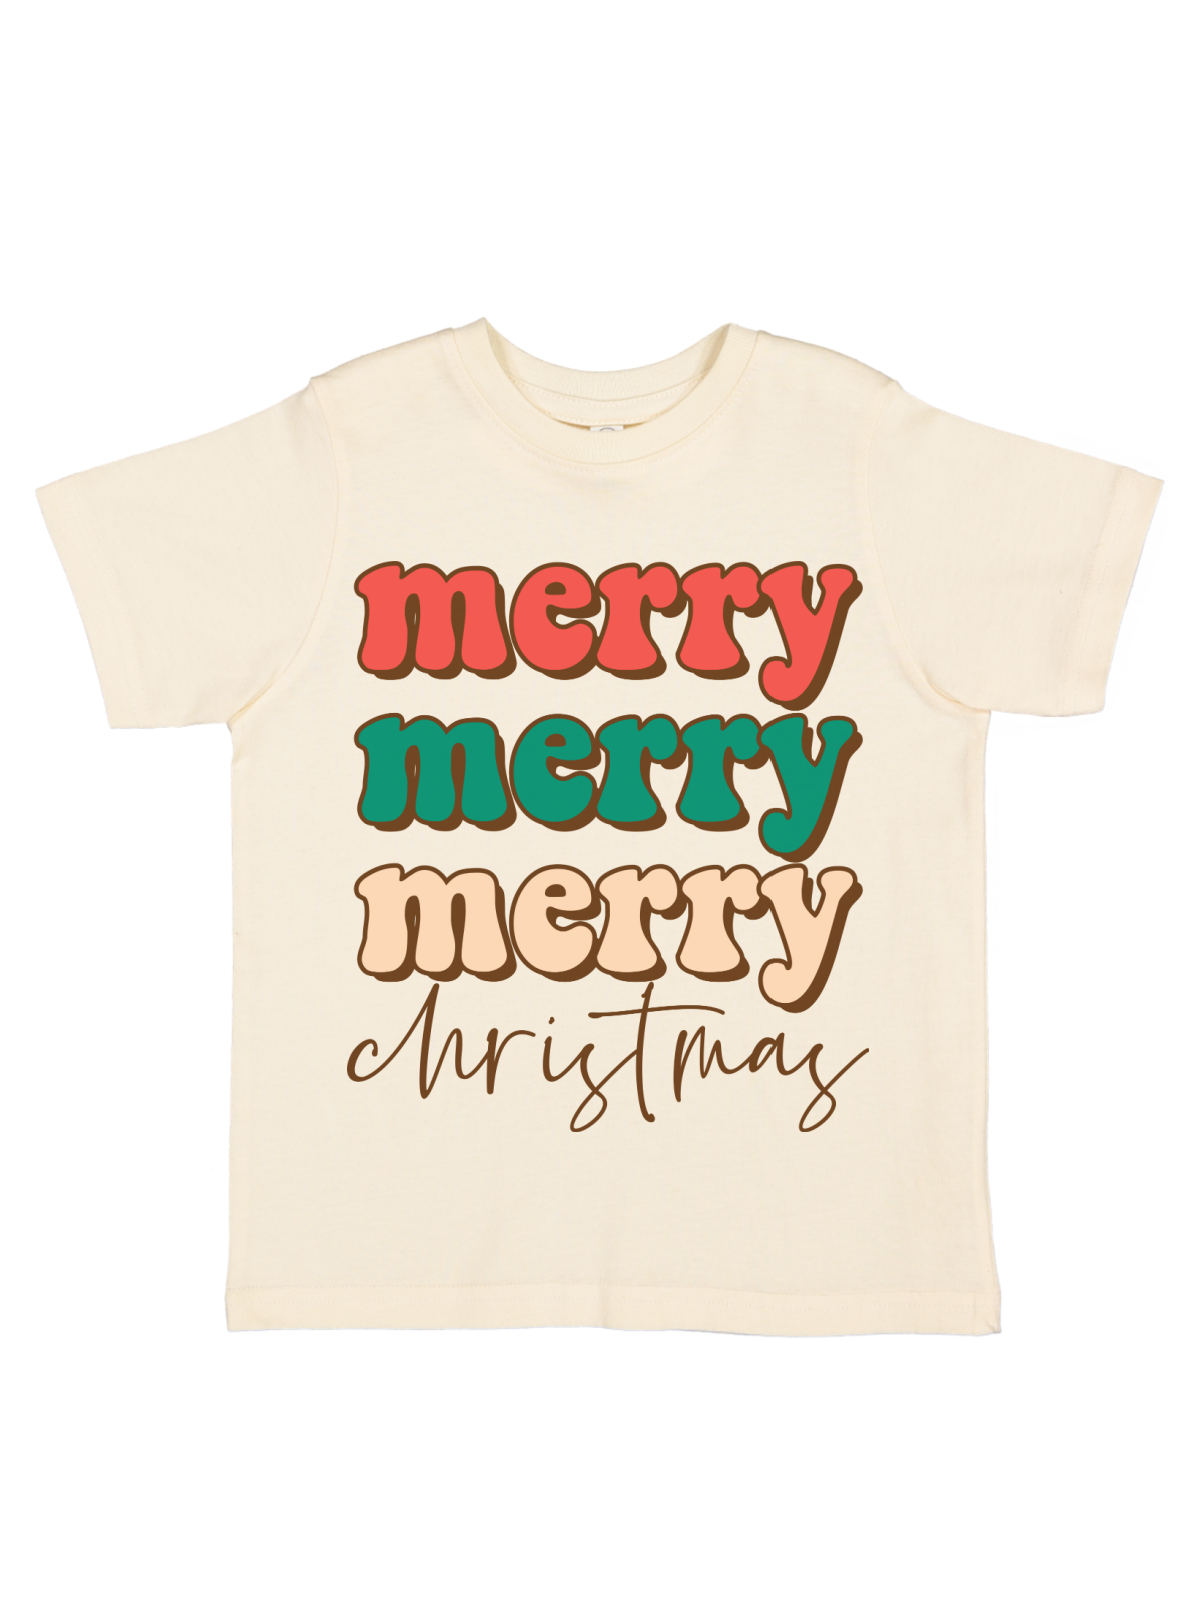 Merry Merry Merry Christmas Kids Shirt